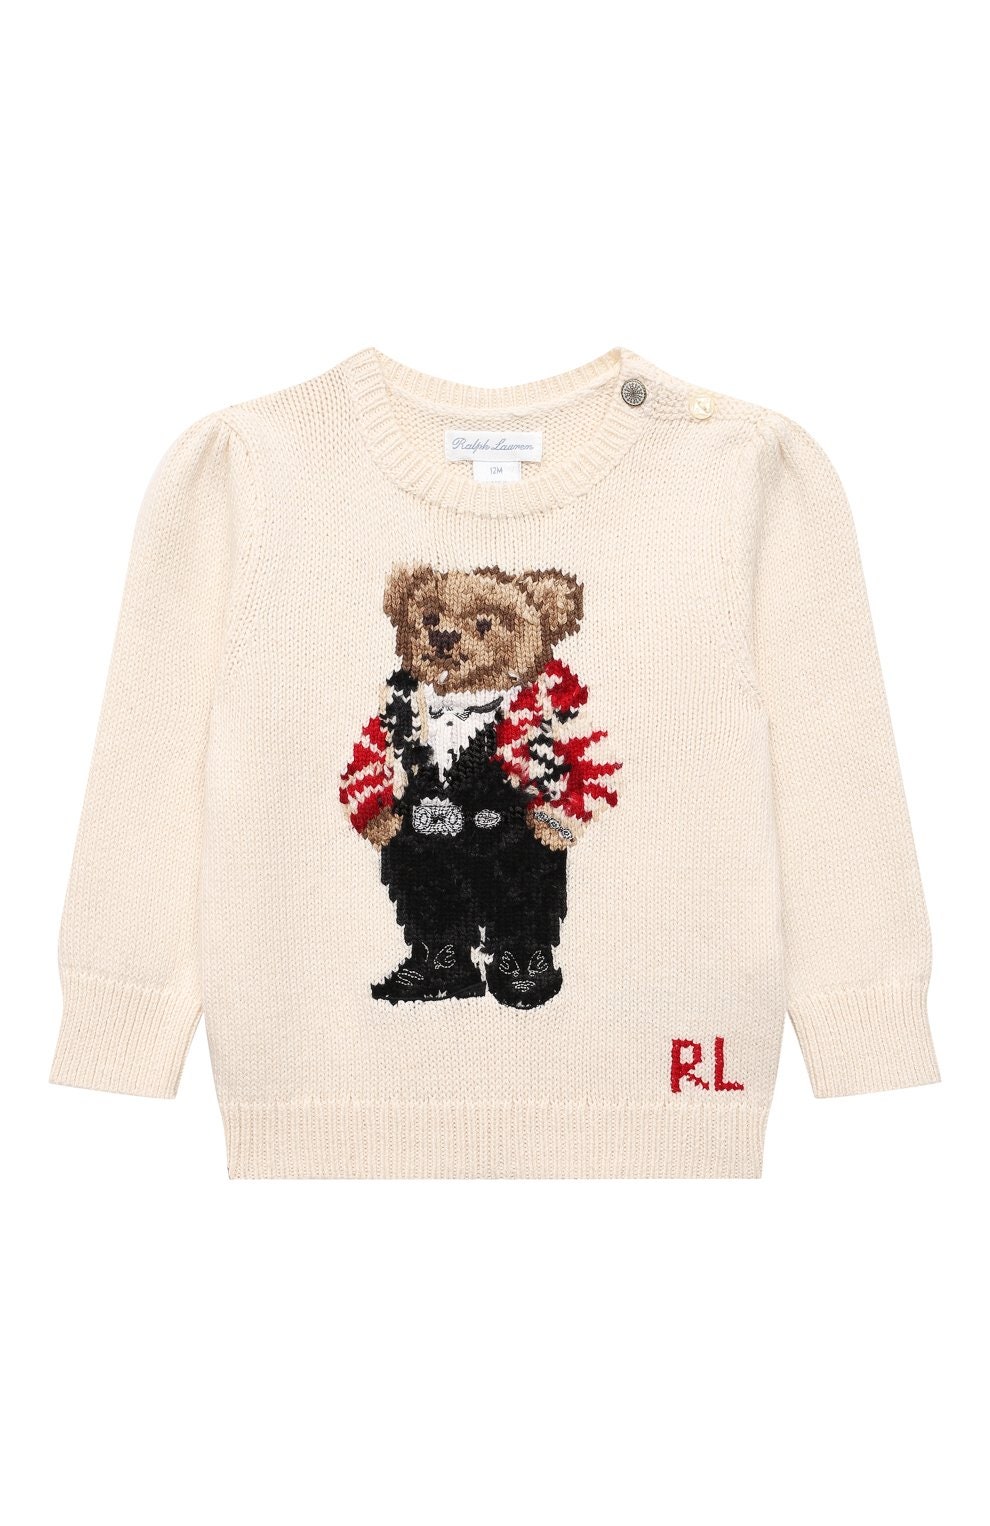 Хлопковый пуловер Polo Ralph Lauren 14 050 руб.